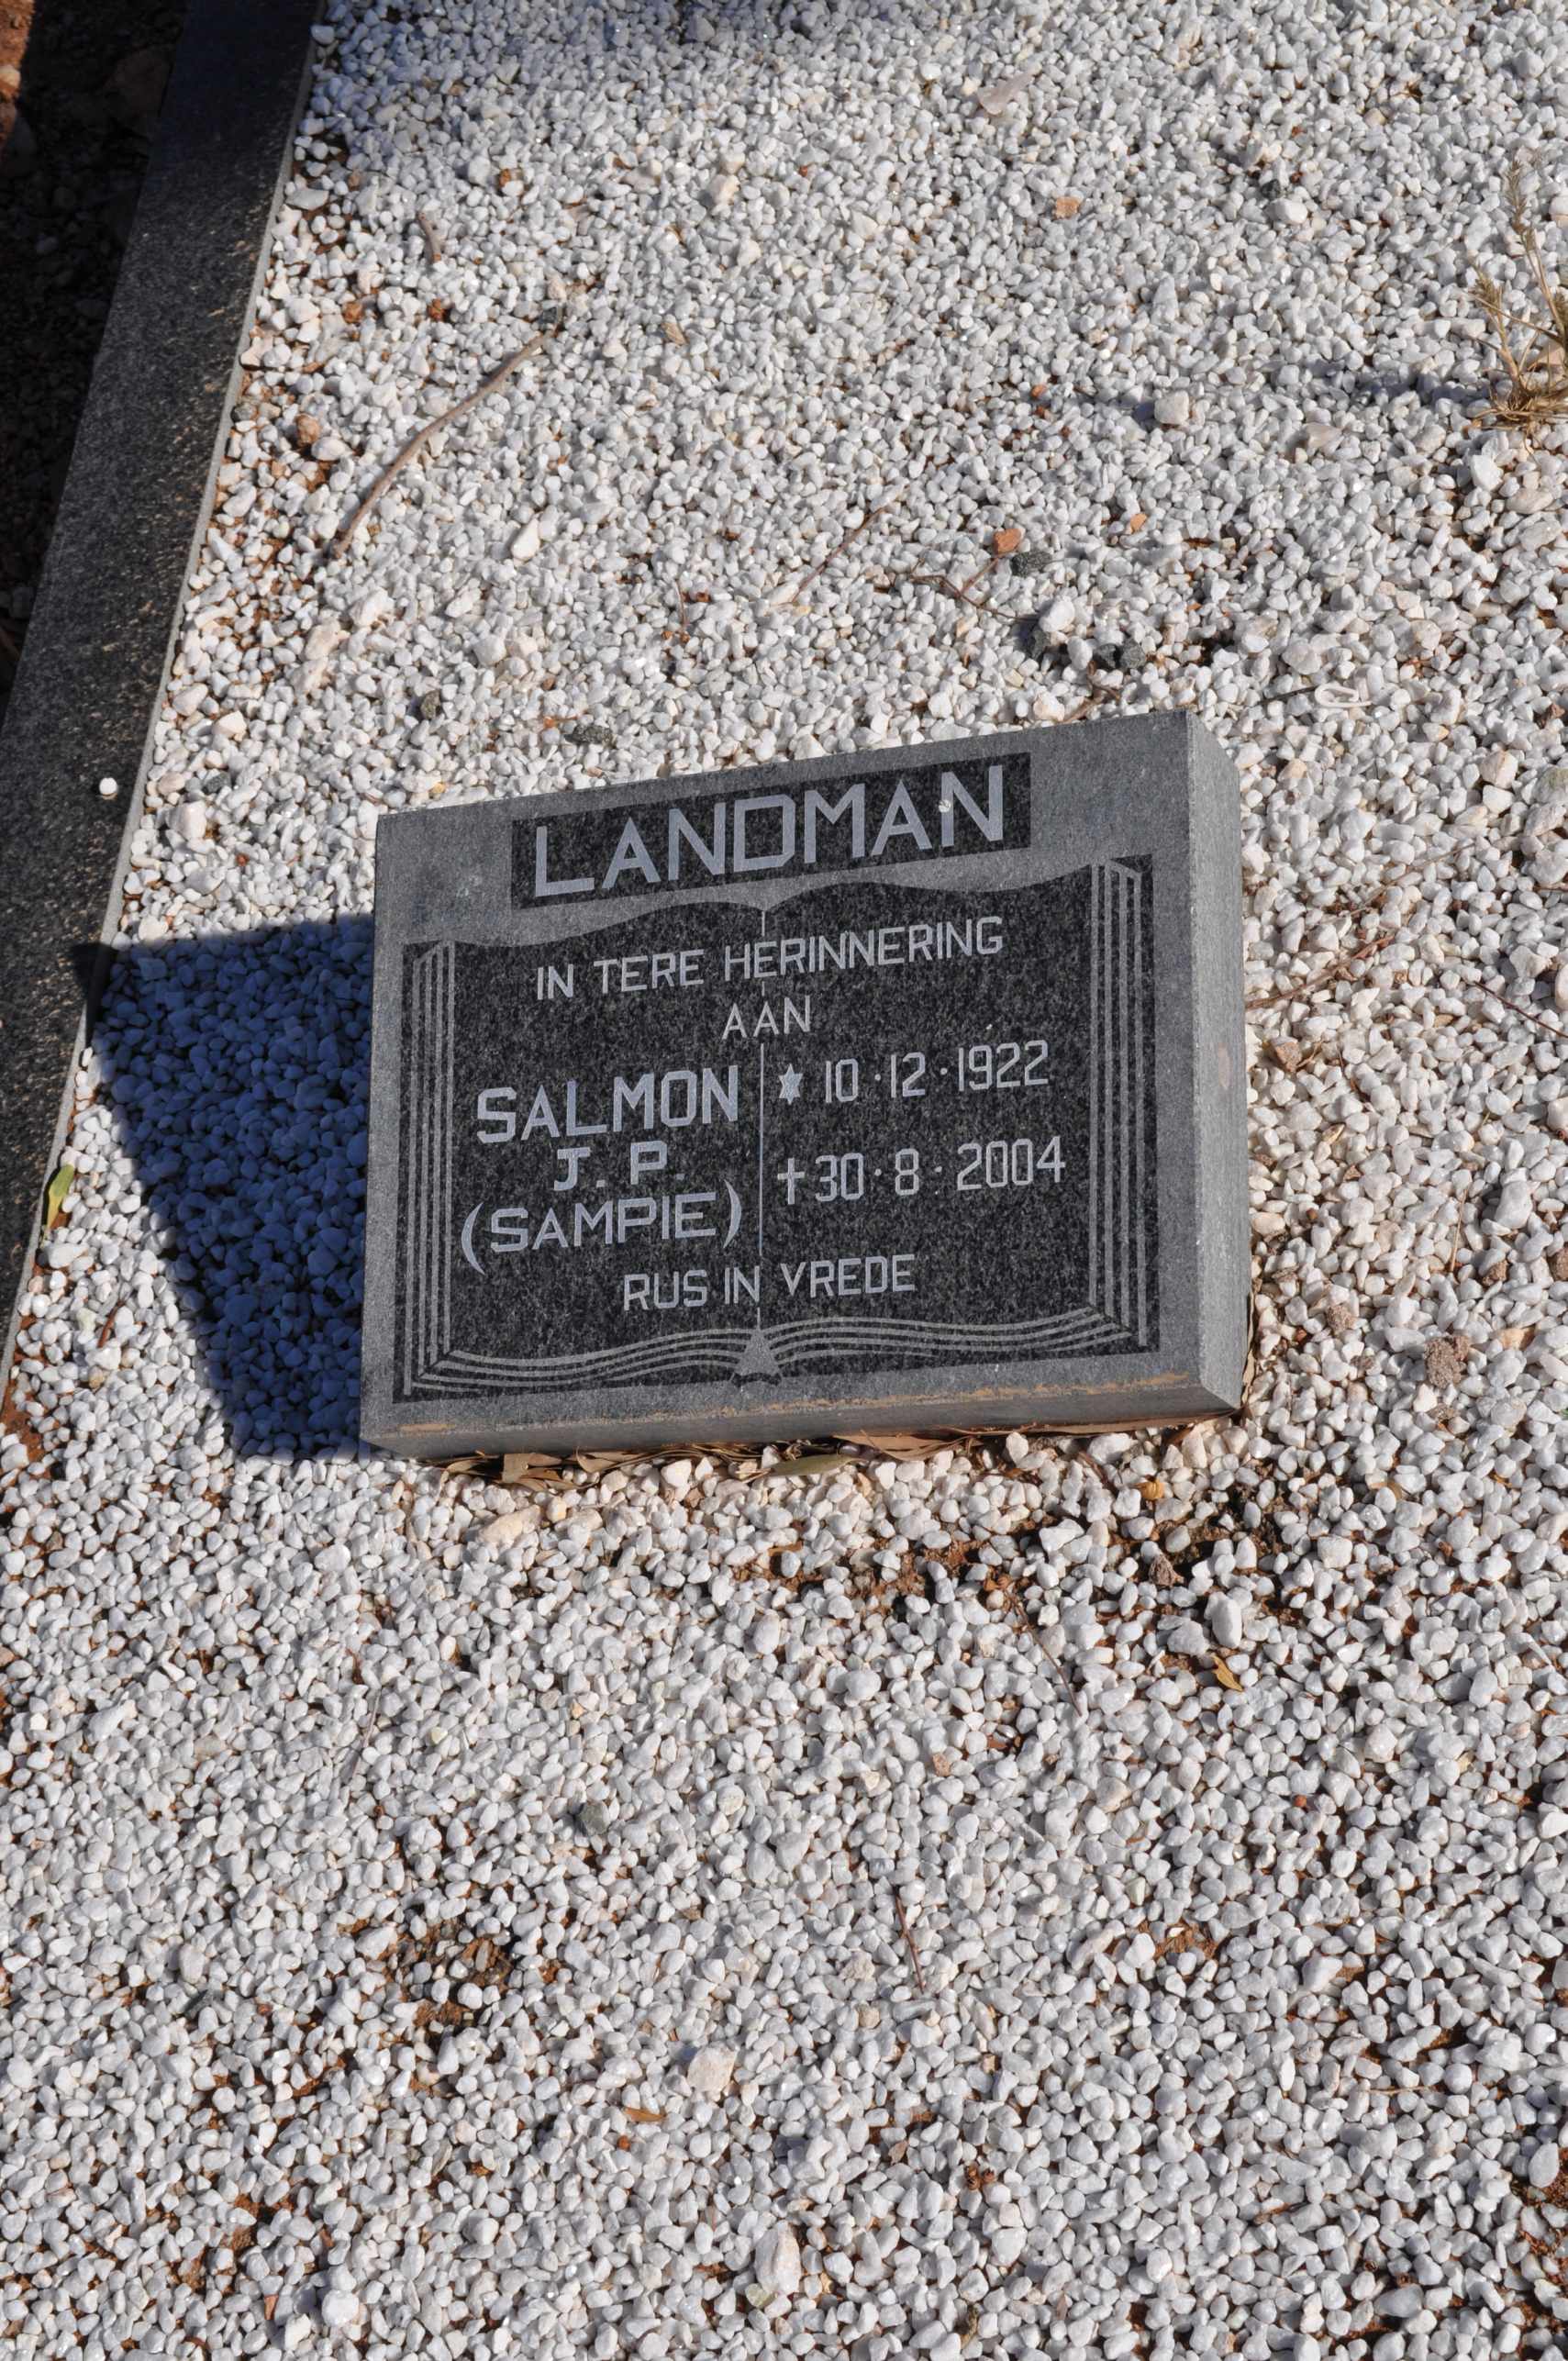 Landman, Salmon JP Sampie